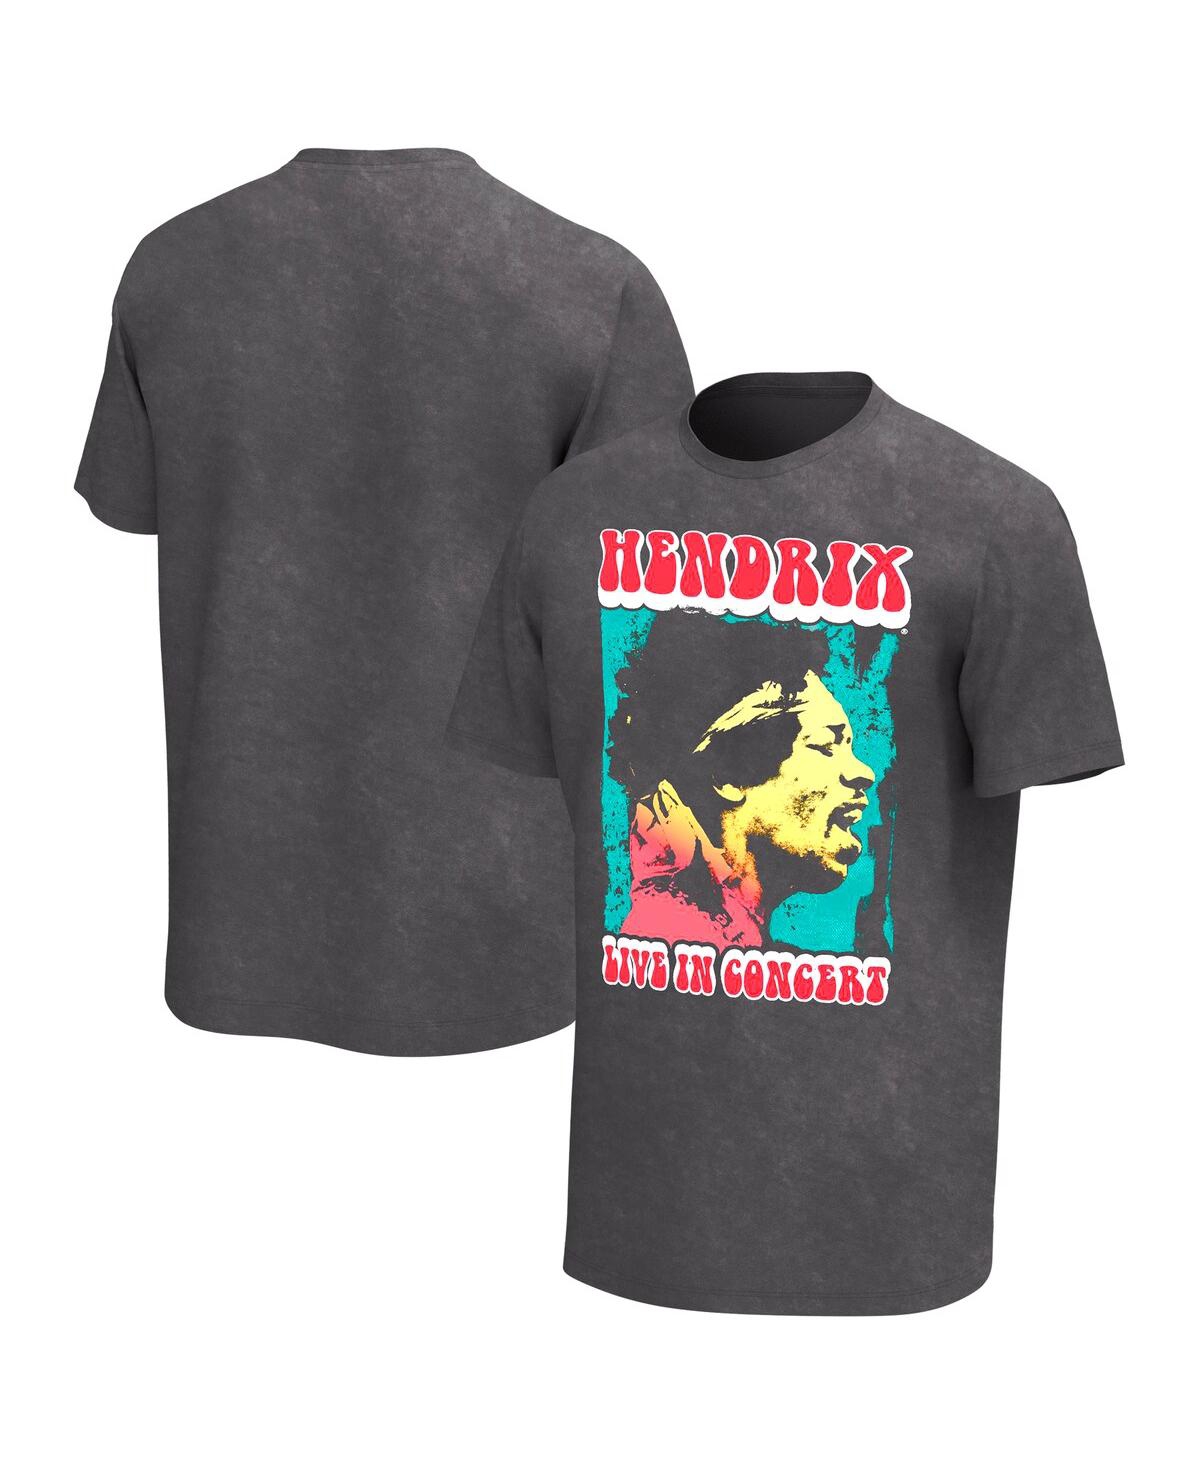 Men's Black Jimi Hendrix Live In Concert Washed Graphic T-shirt - Black